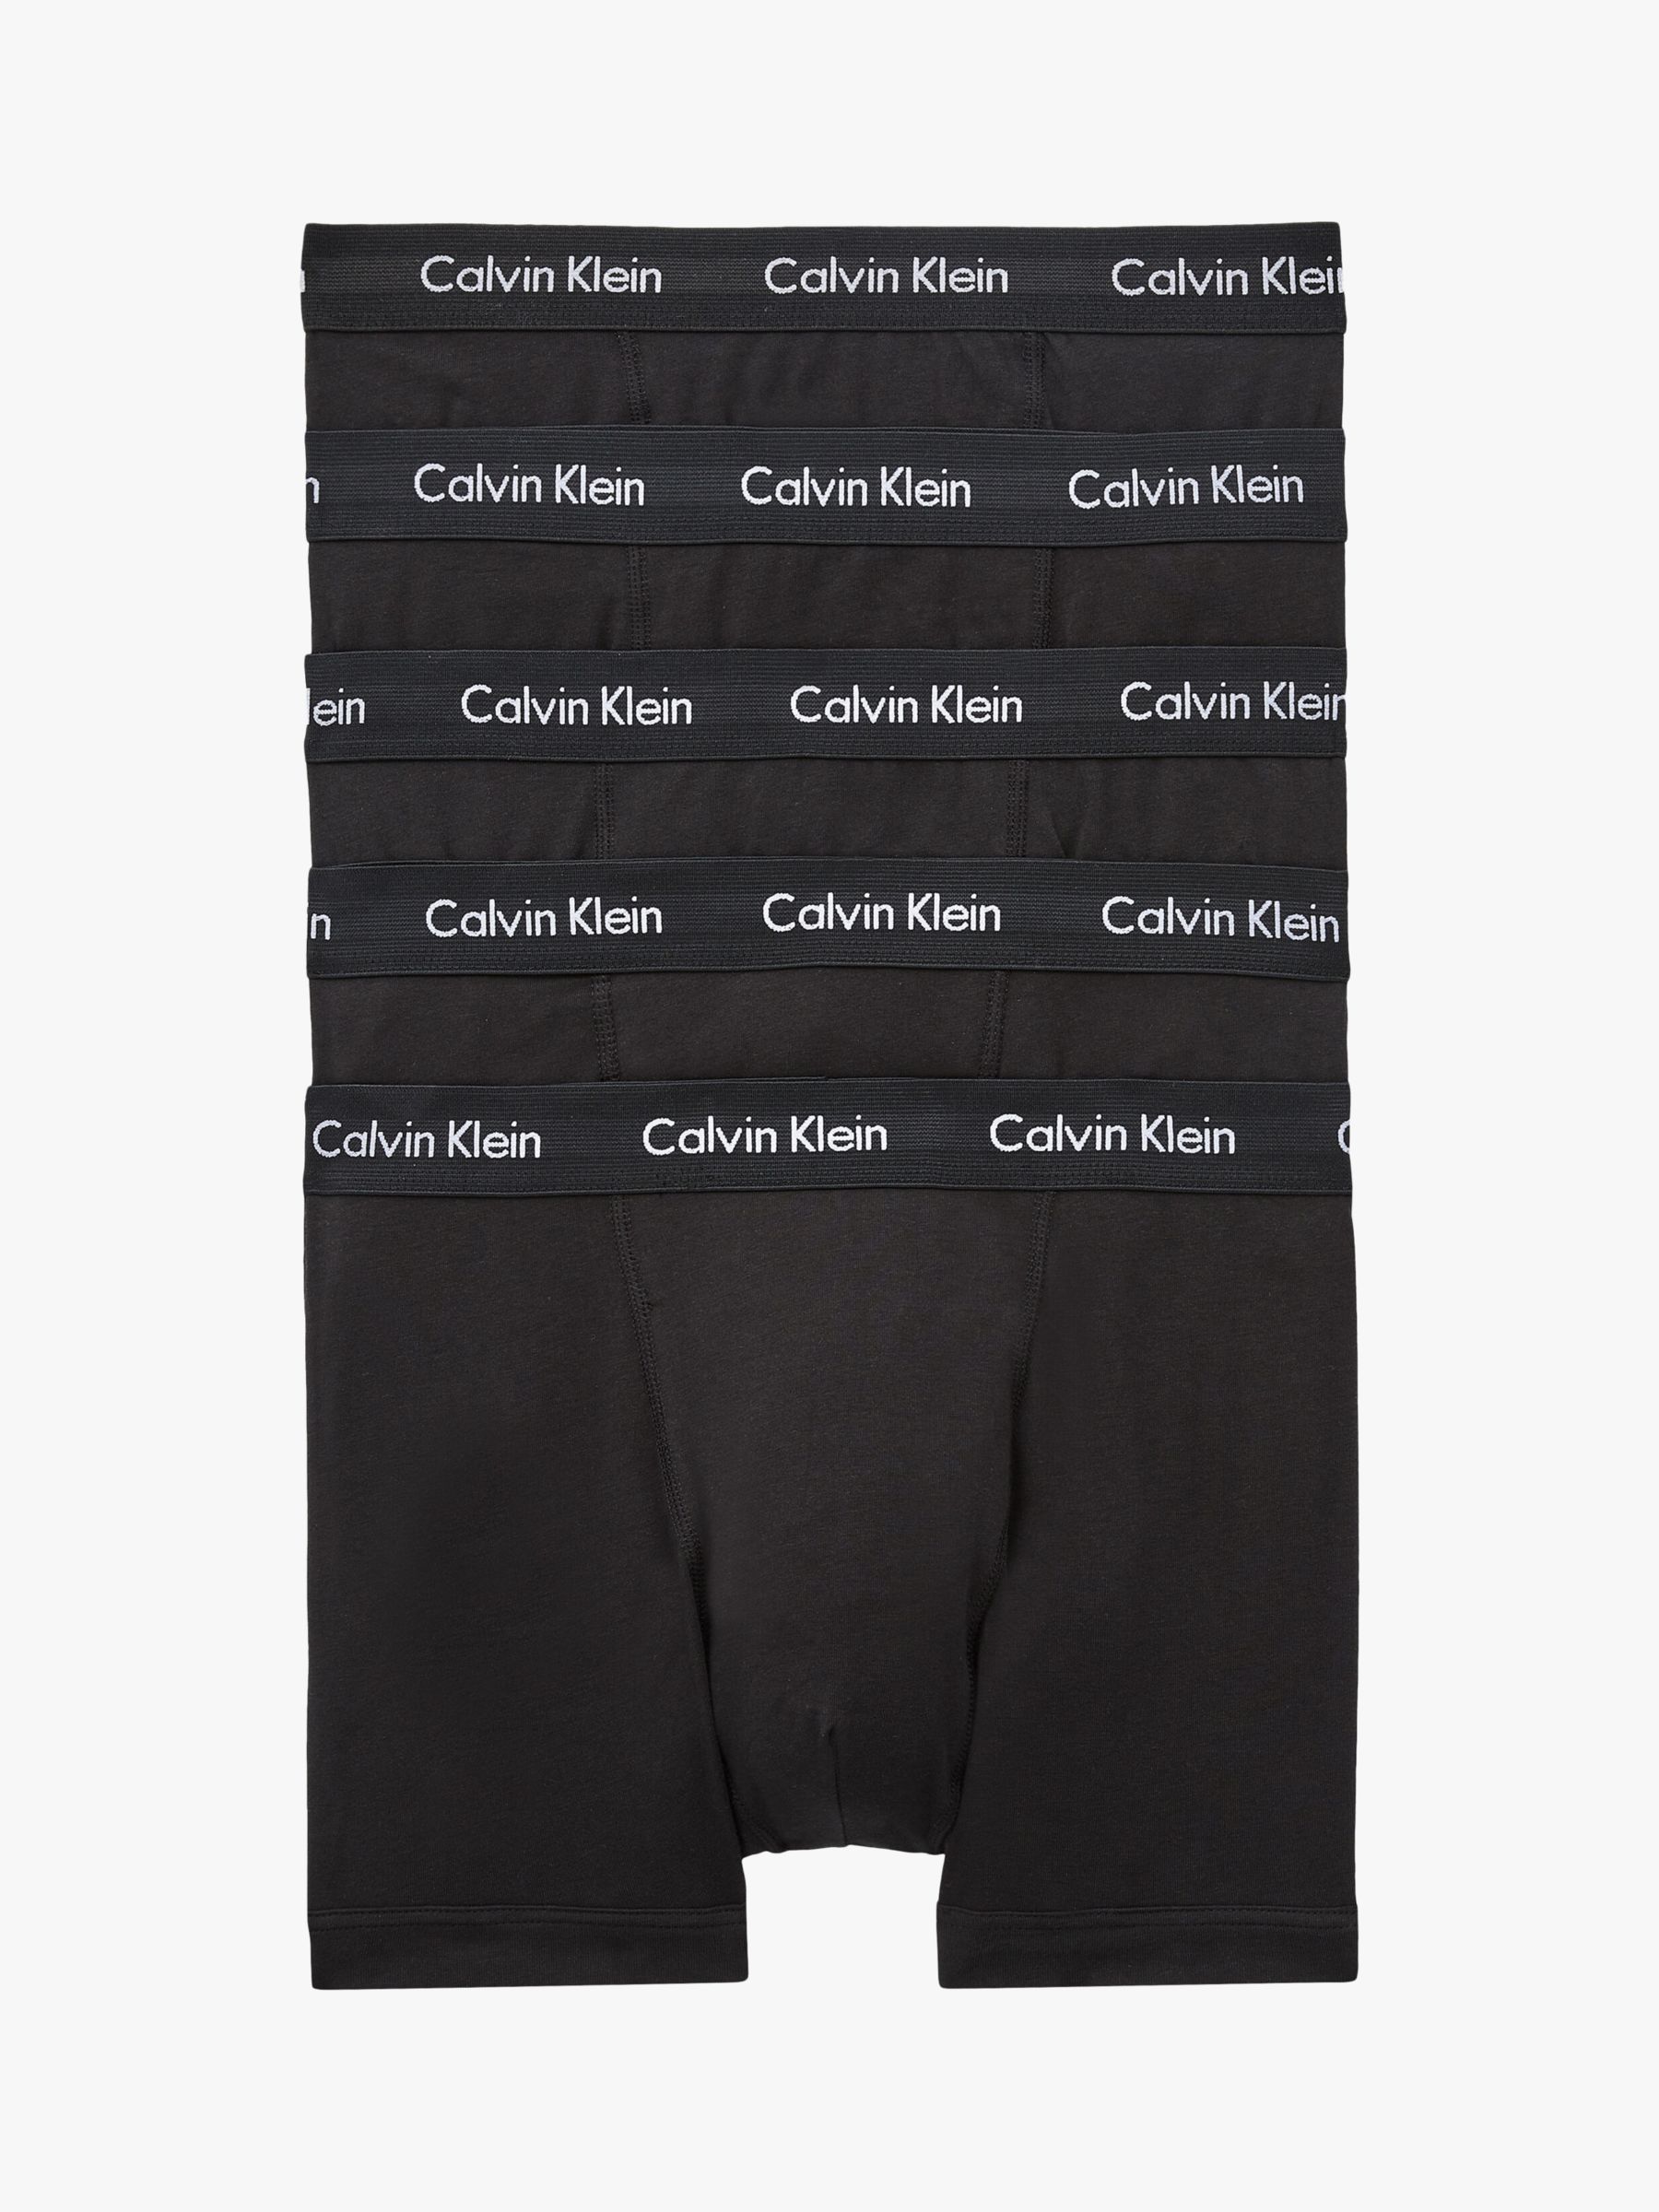 Calvin Klein Regular Cotton Stretch Trunks, Pack of 5, Black, XS